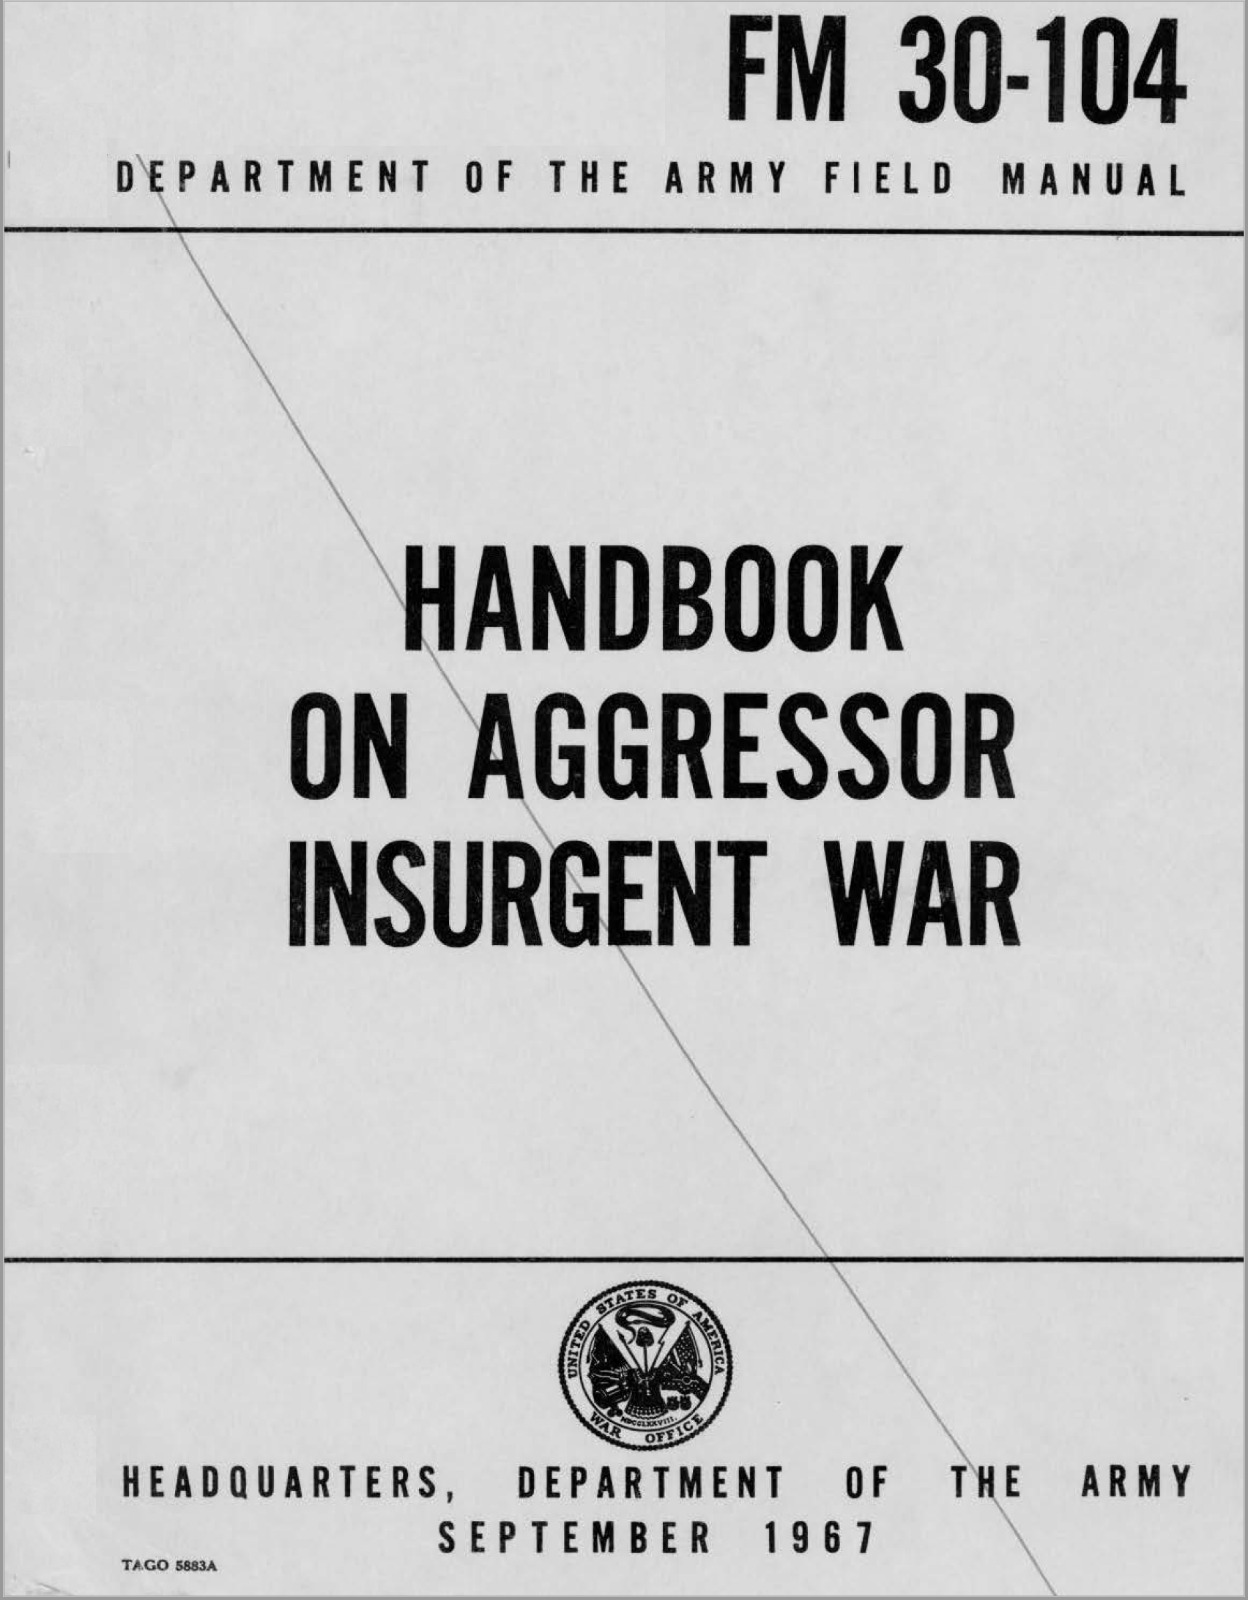 89 Page 1967 FM 30-104 Handbook Aggressor Insurgent War OPFOR Manual on Data CD